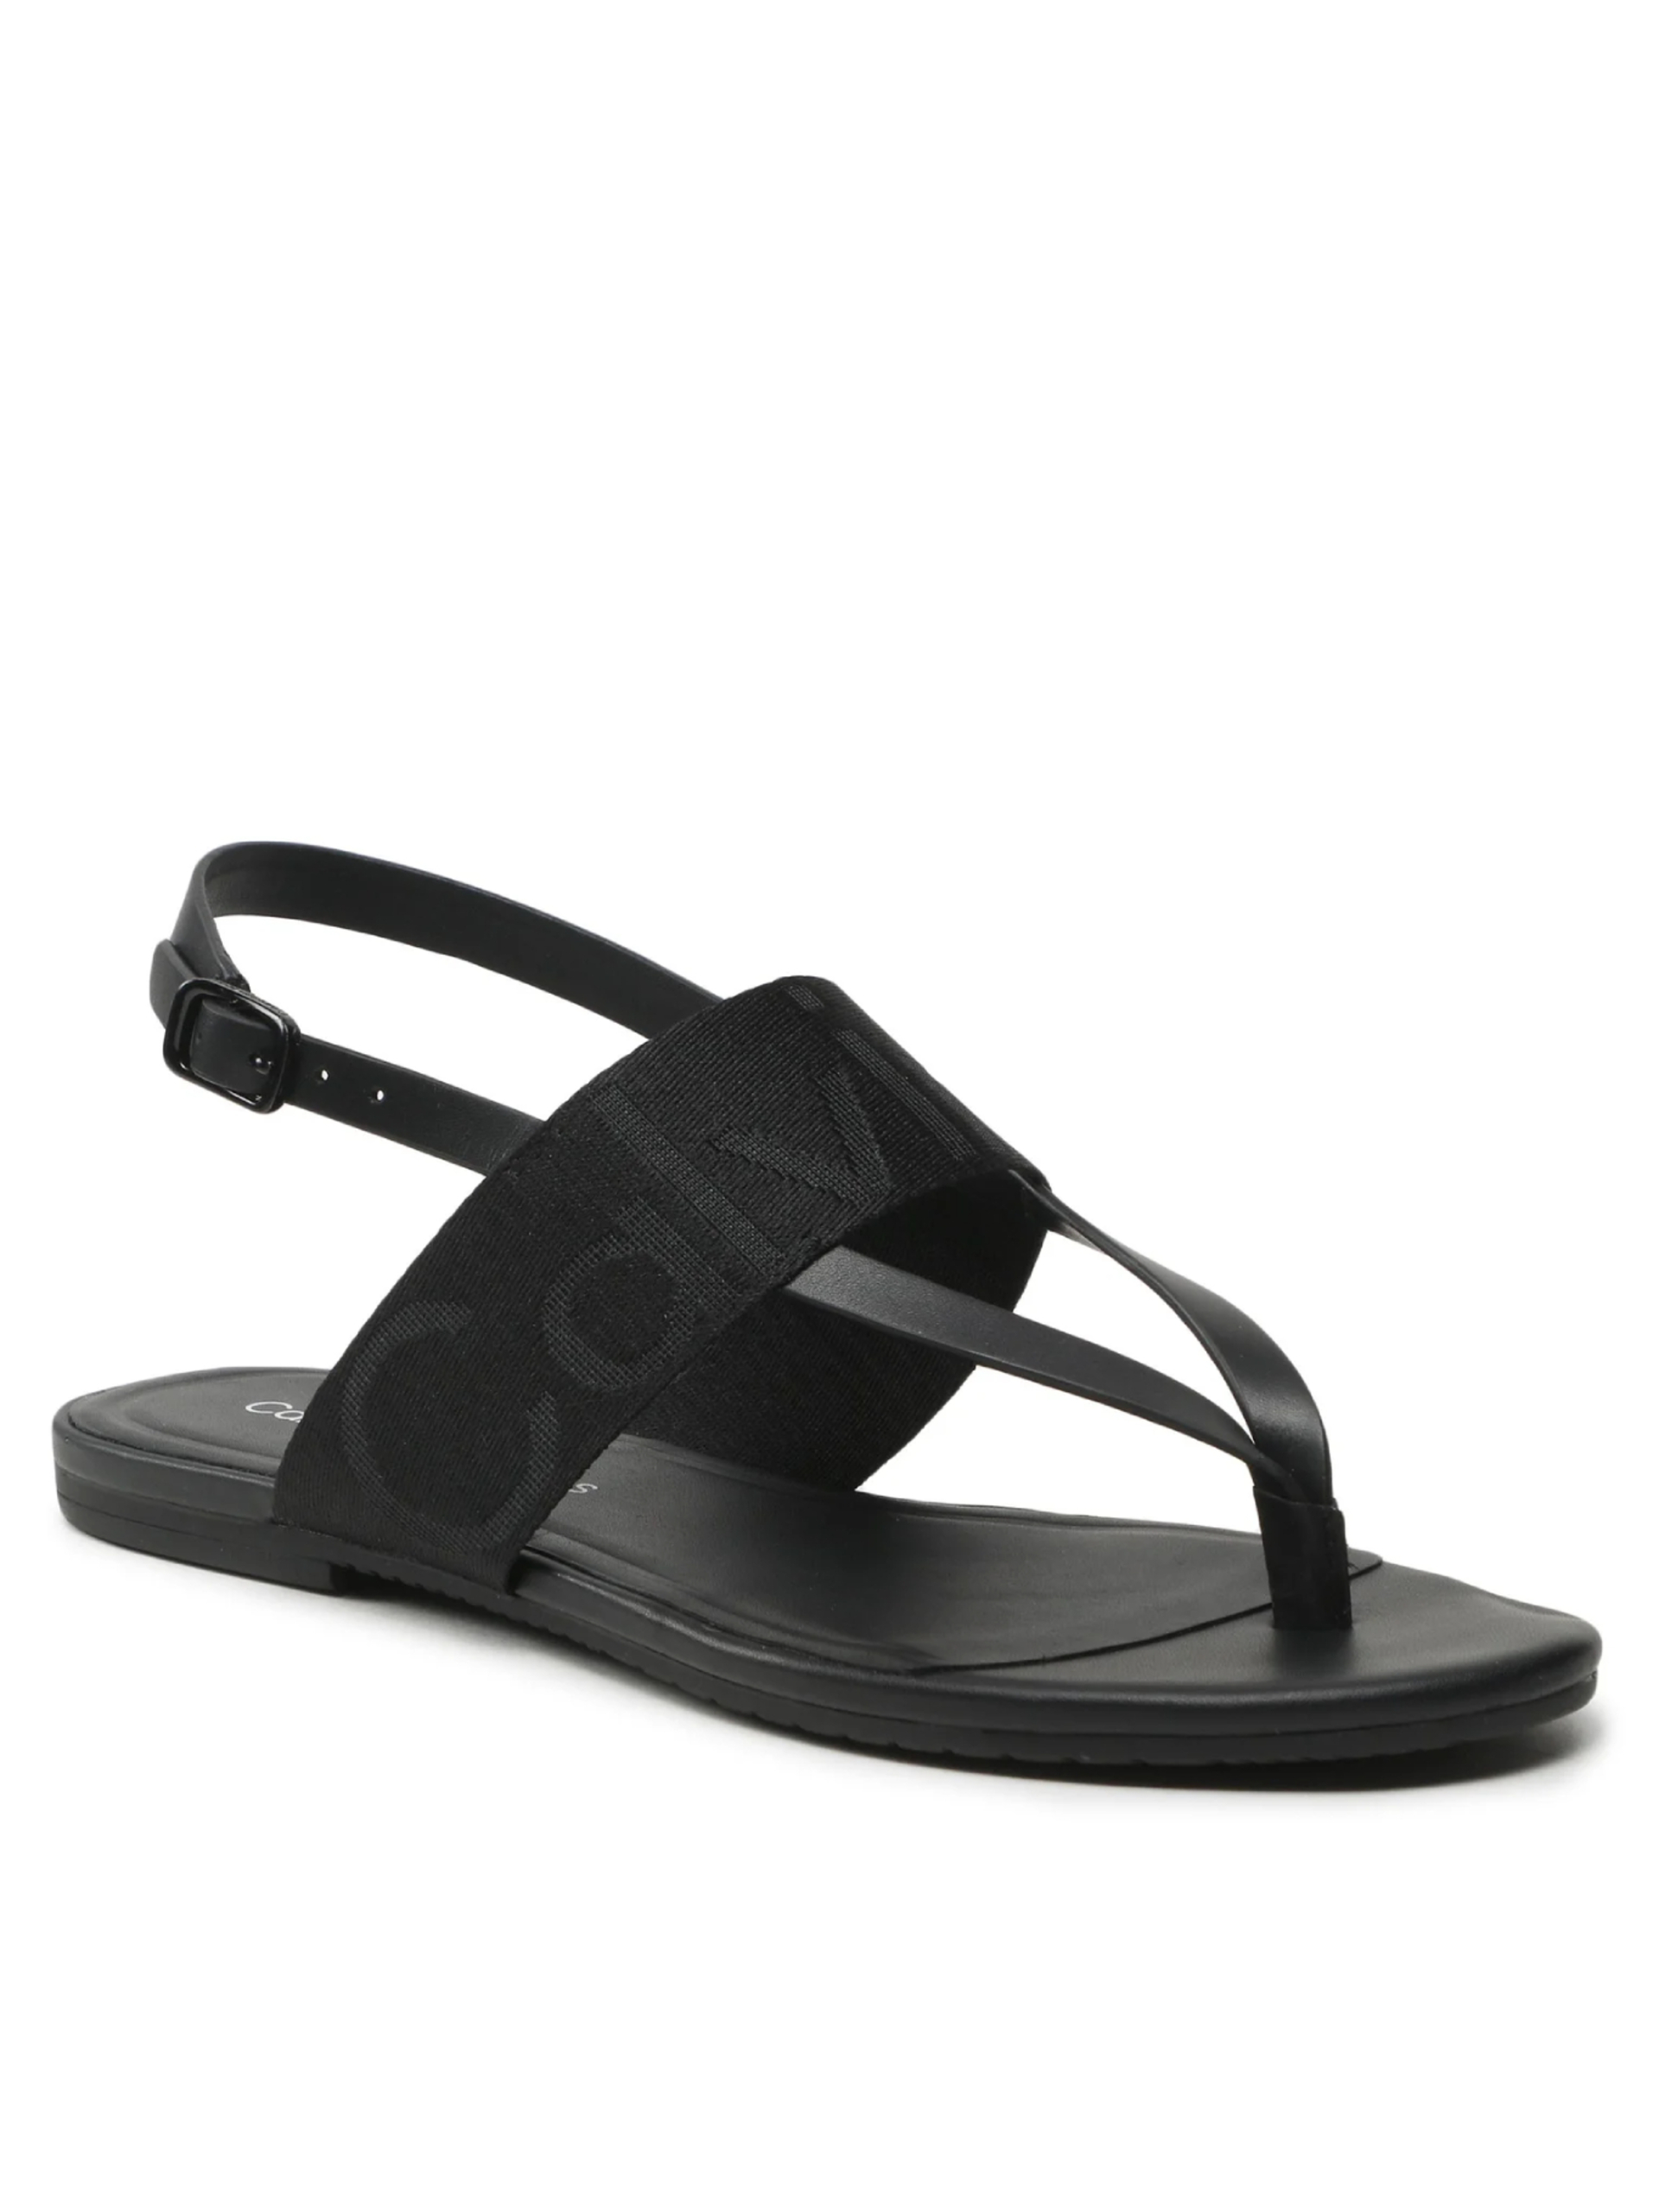 Calvin Klein dámské černé sandály FLAT SANDAL TOEPOST WEBBING - 36 (BDS)